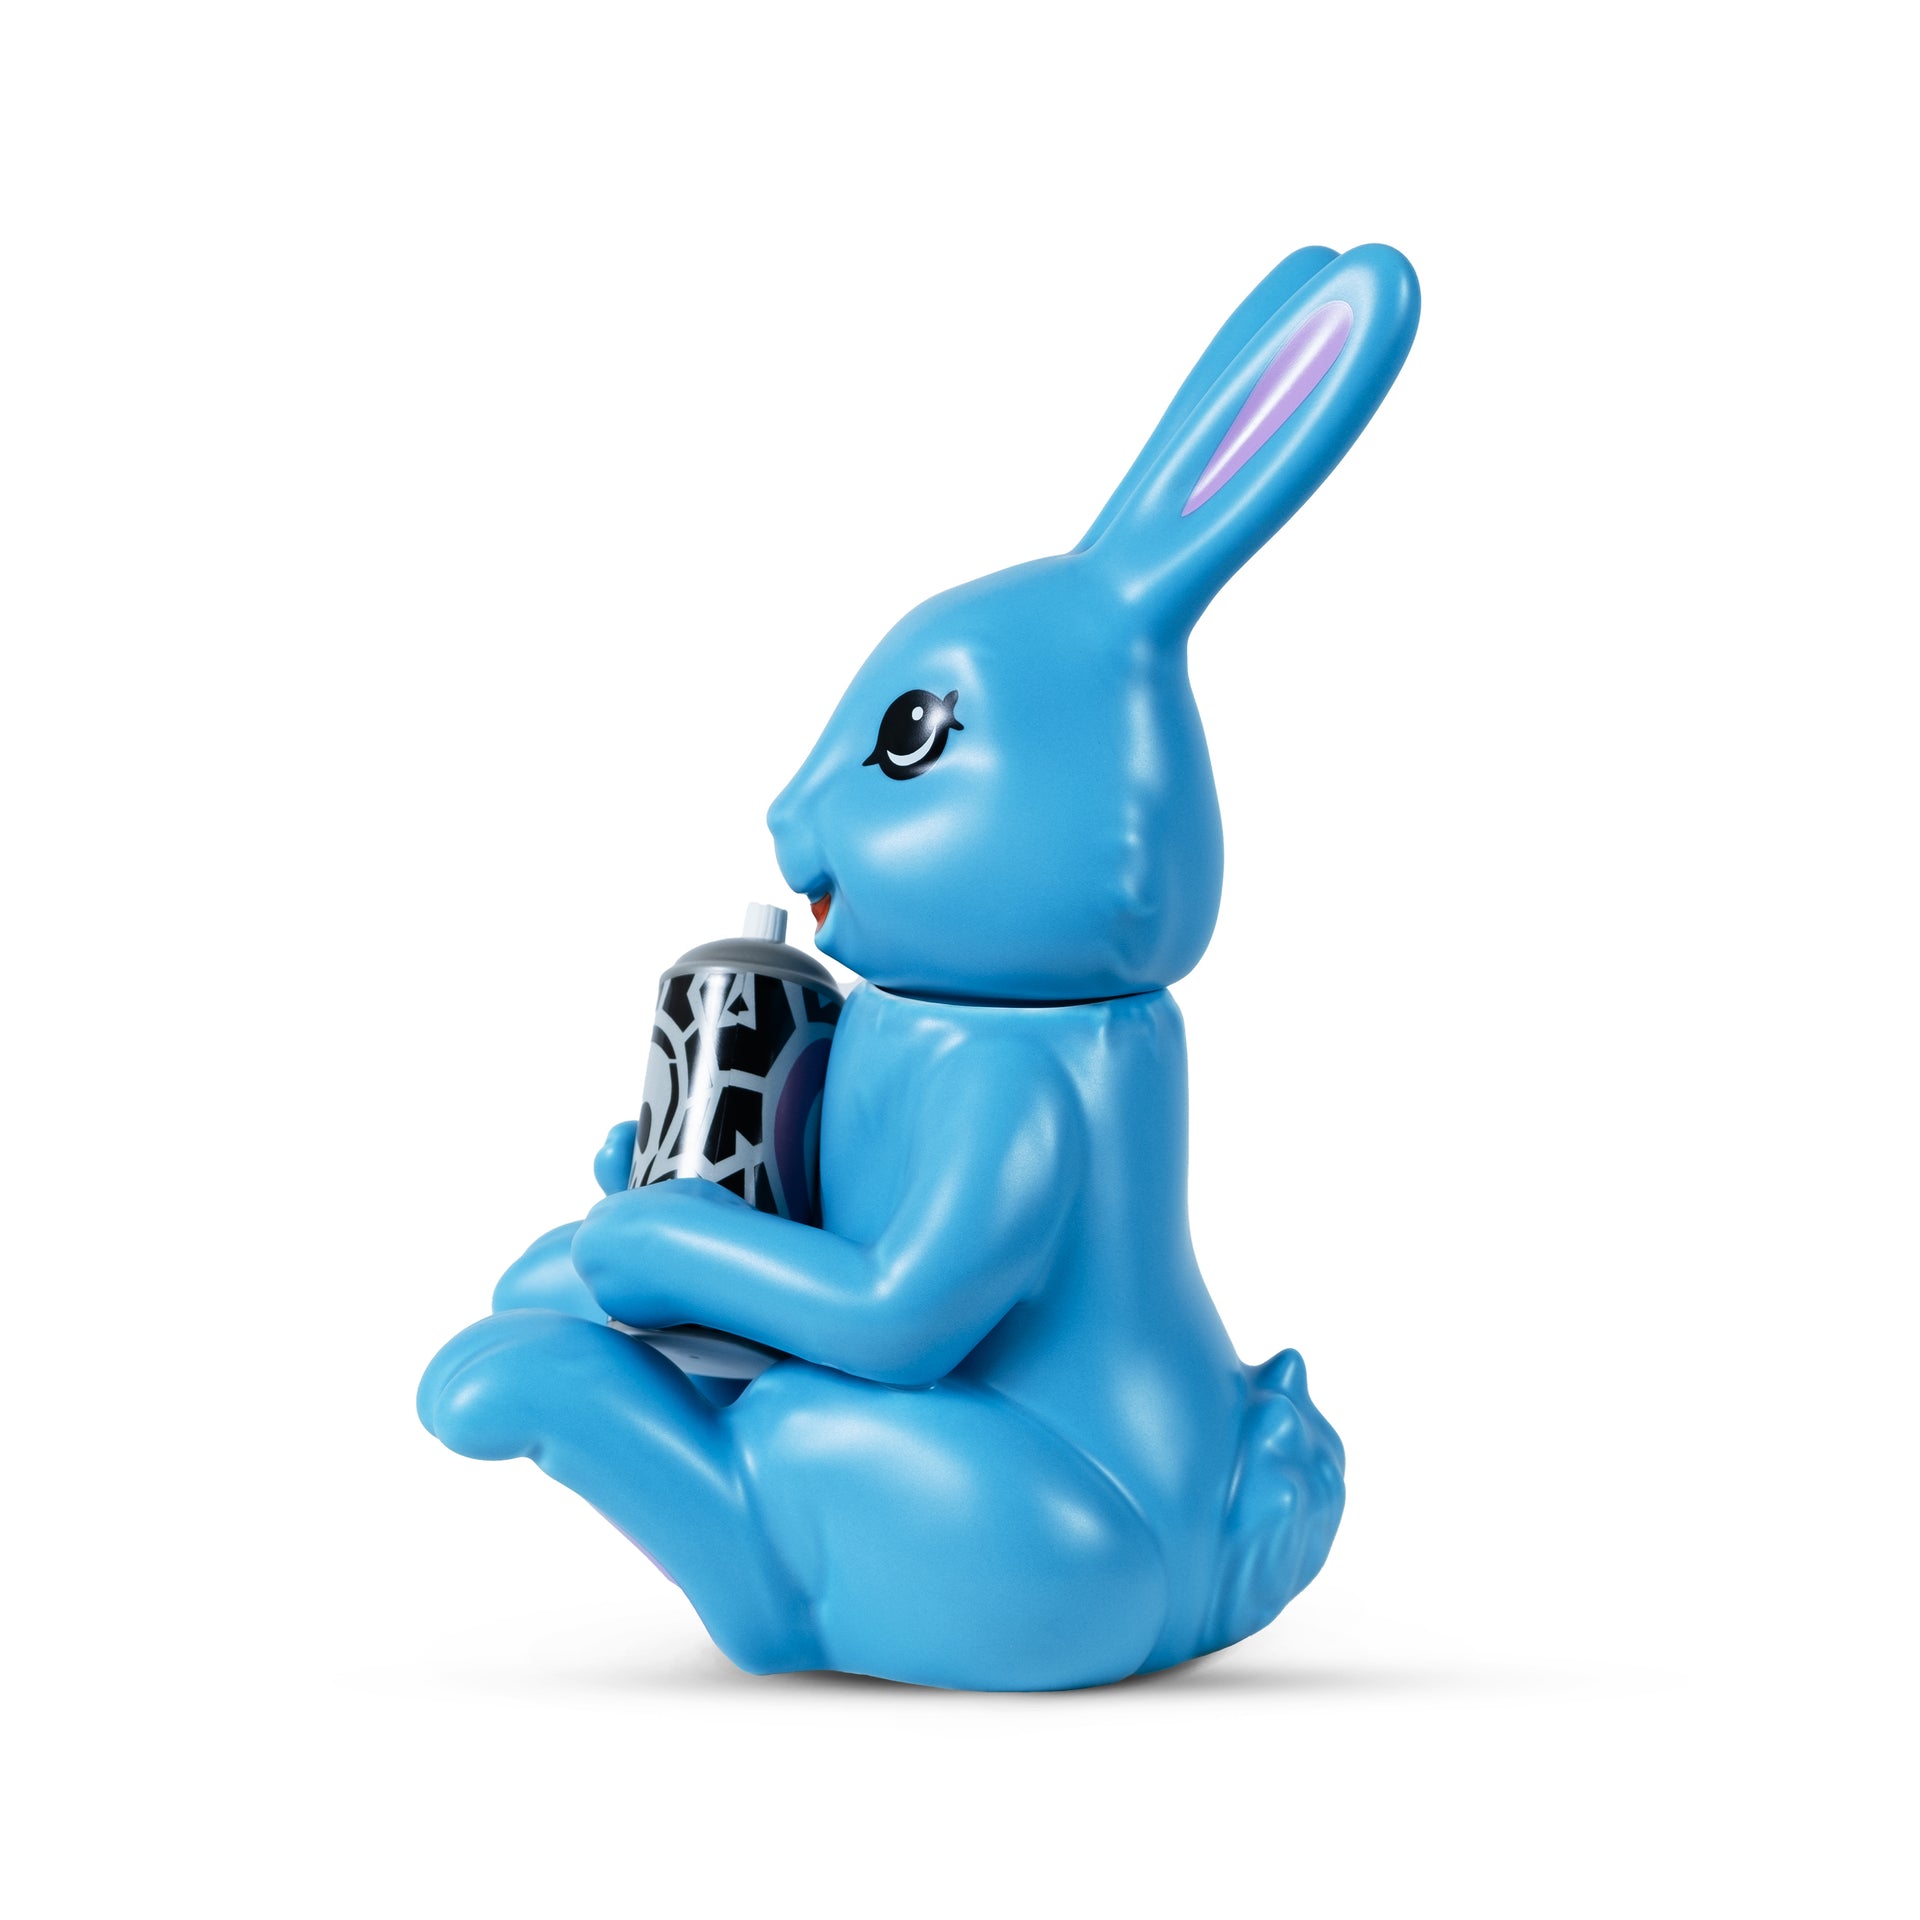 AIKO "Blue Bunny" Cookie Jar